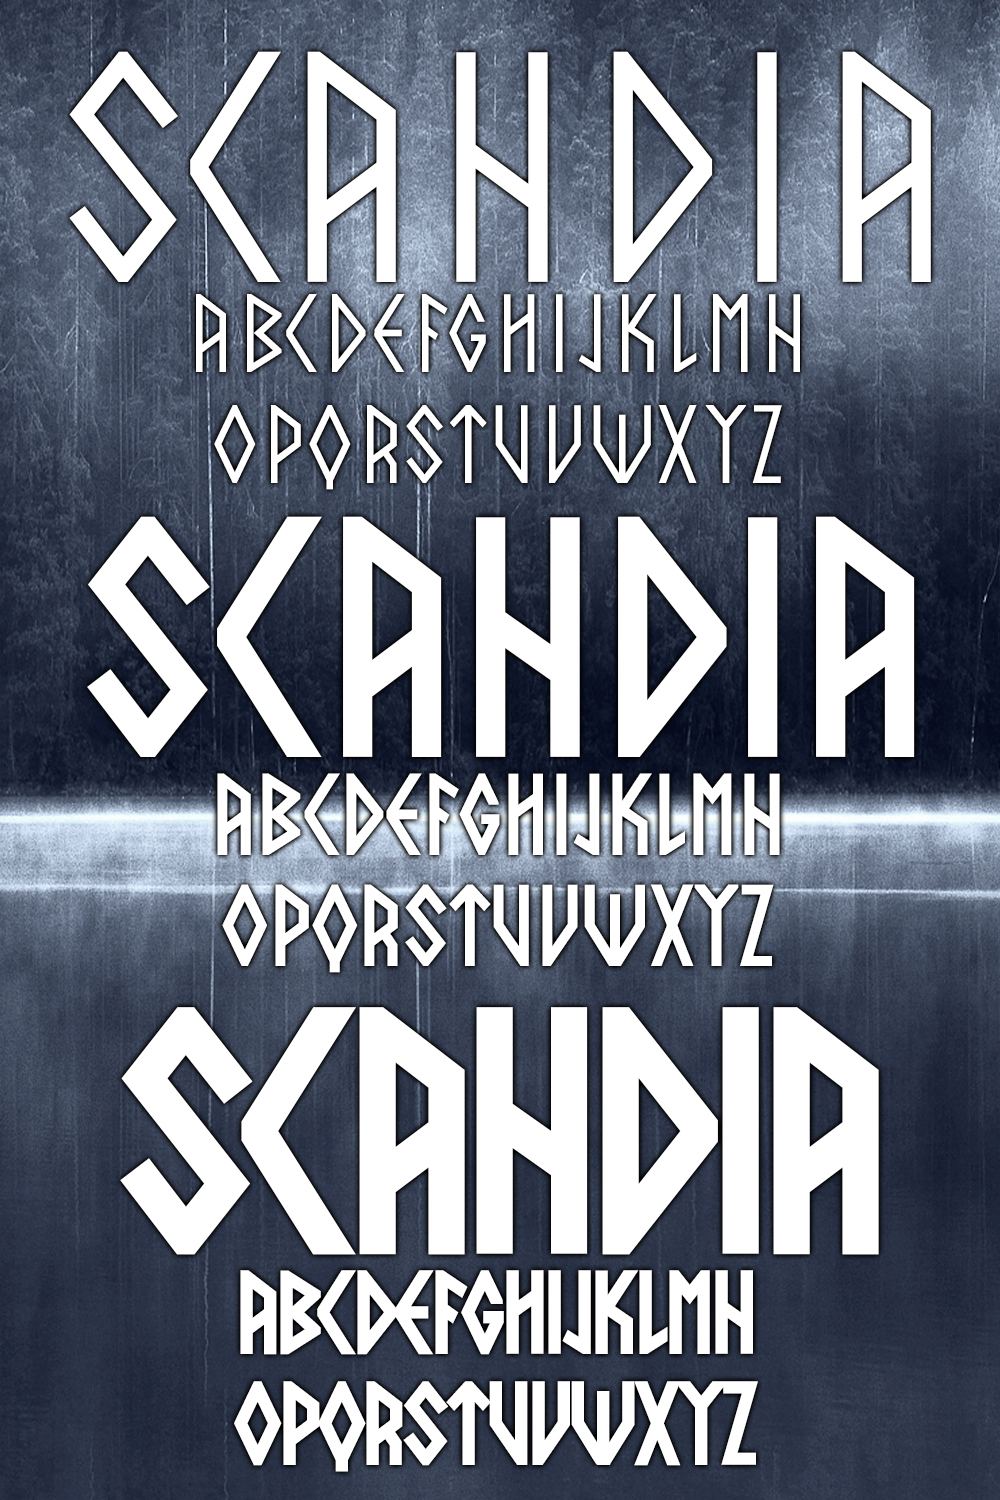 Scandia font of pinterest.